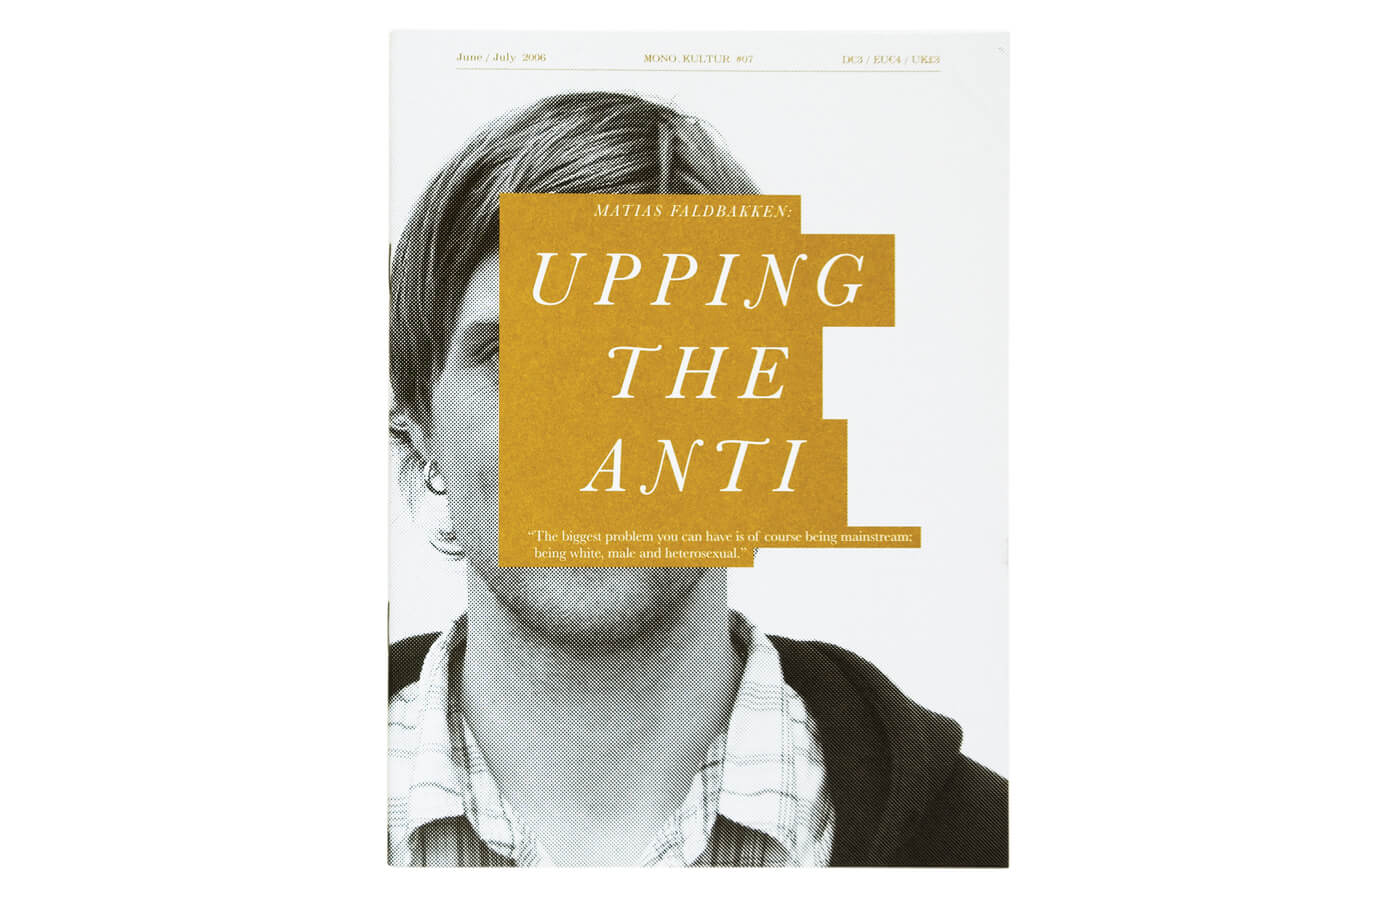 mono.kultur #07, Matias Faldbakken: Upping The Anti